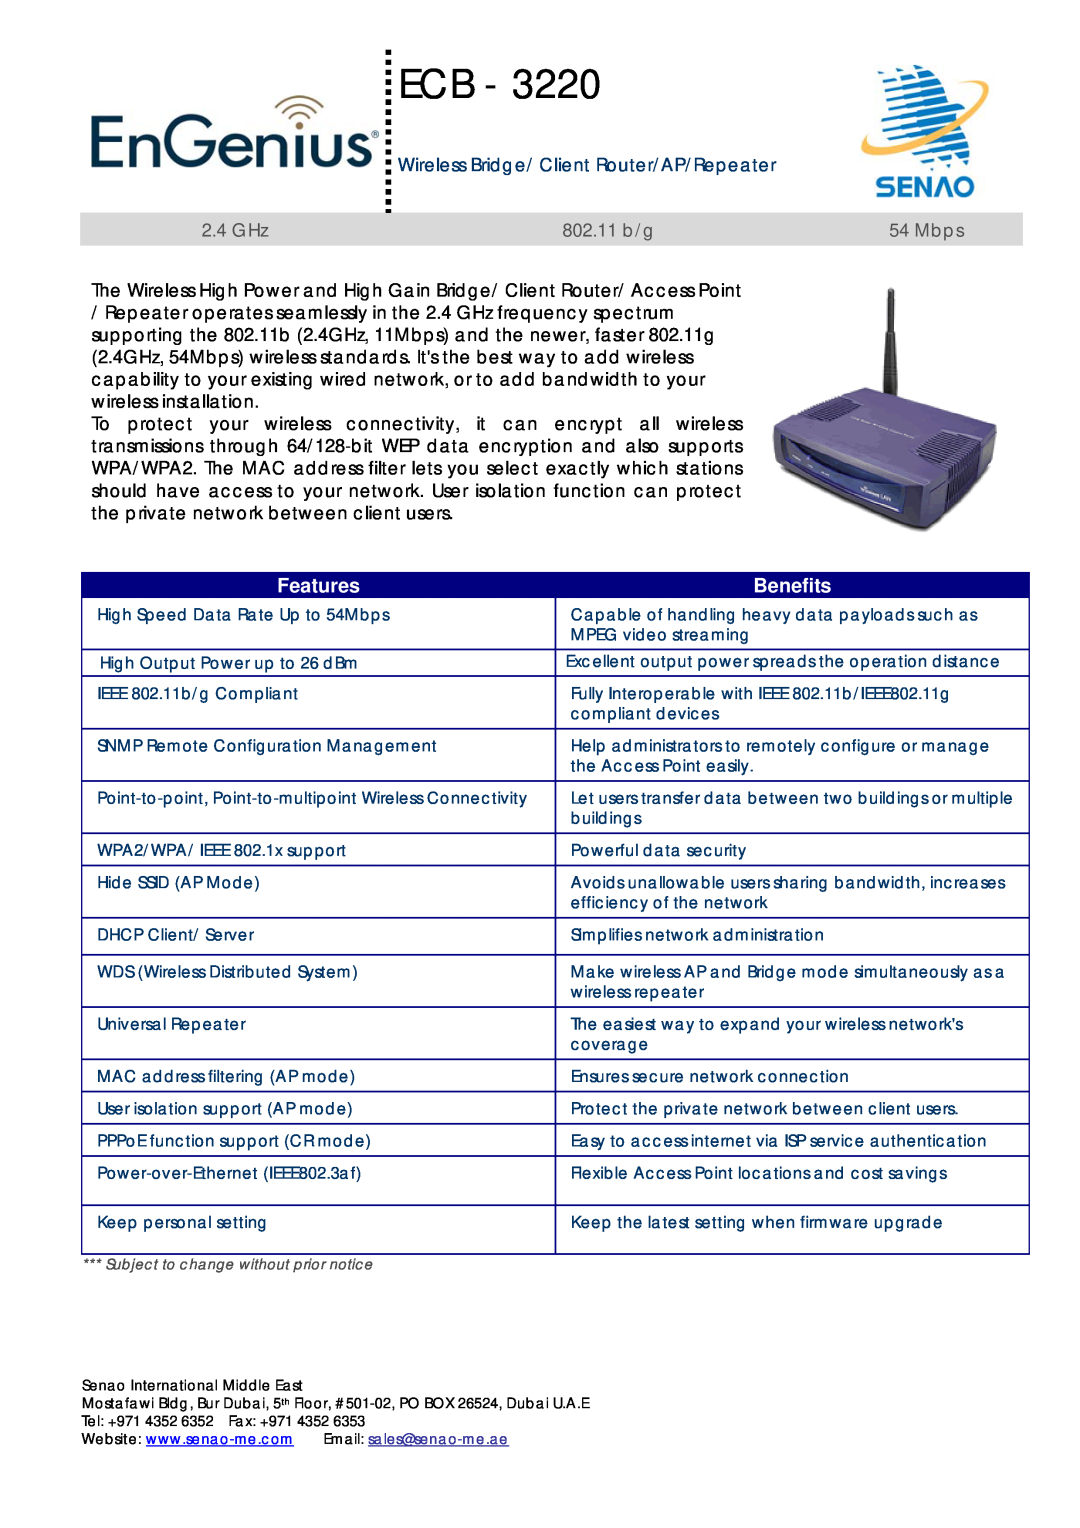 EnGenius Technologies ECB-3220 manual Wireless Bridge/ Client Router/AP/Repeater, 2.4 GHz, 802.11 b/g, Mbps, Features 